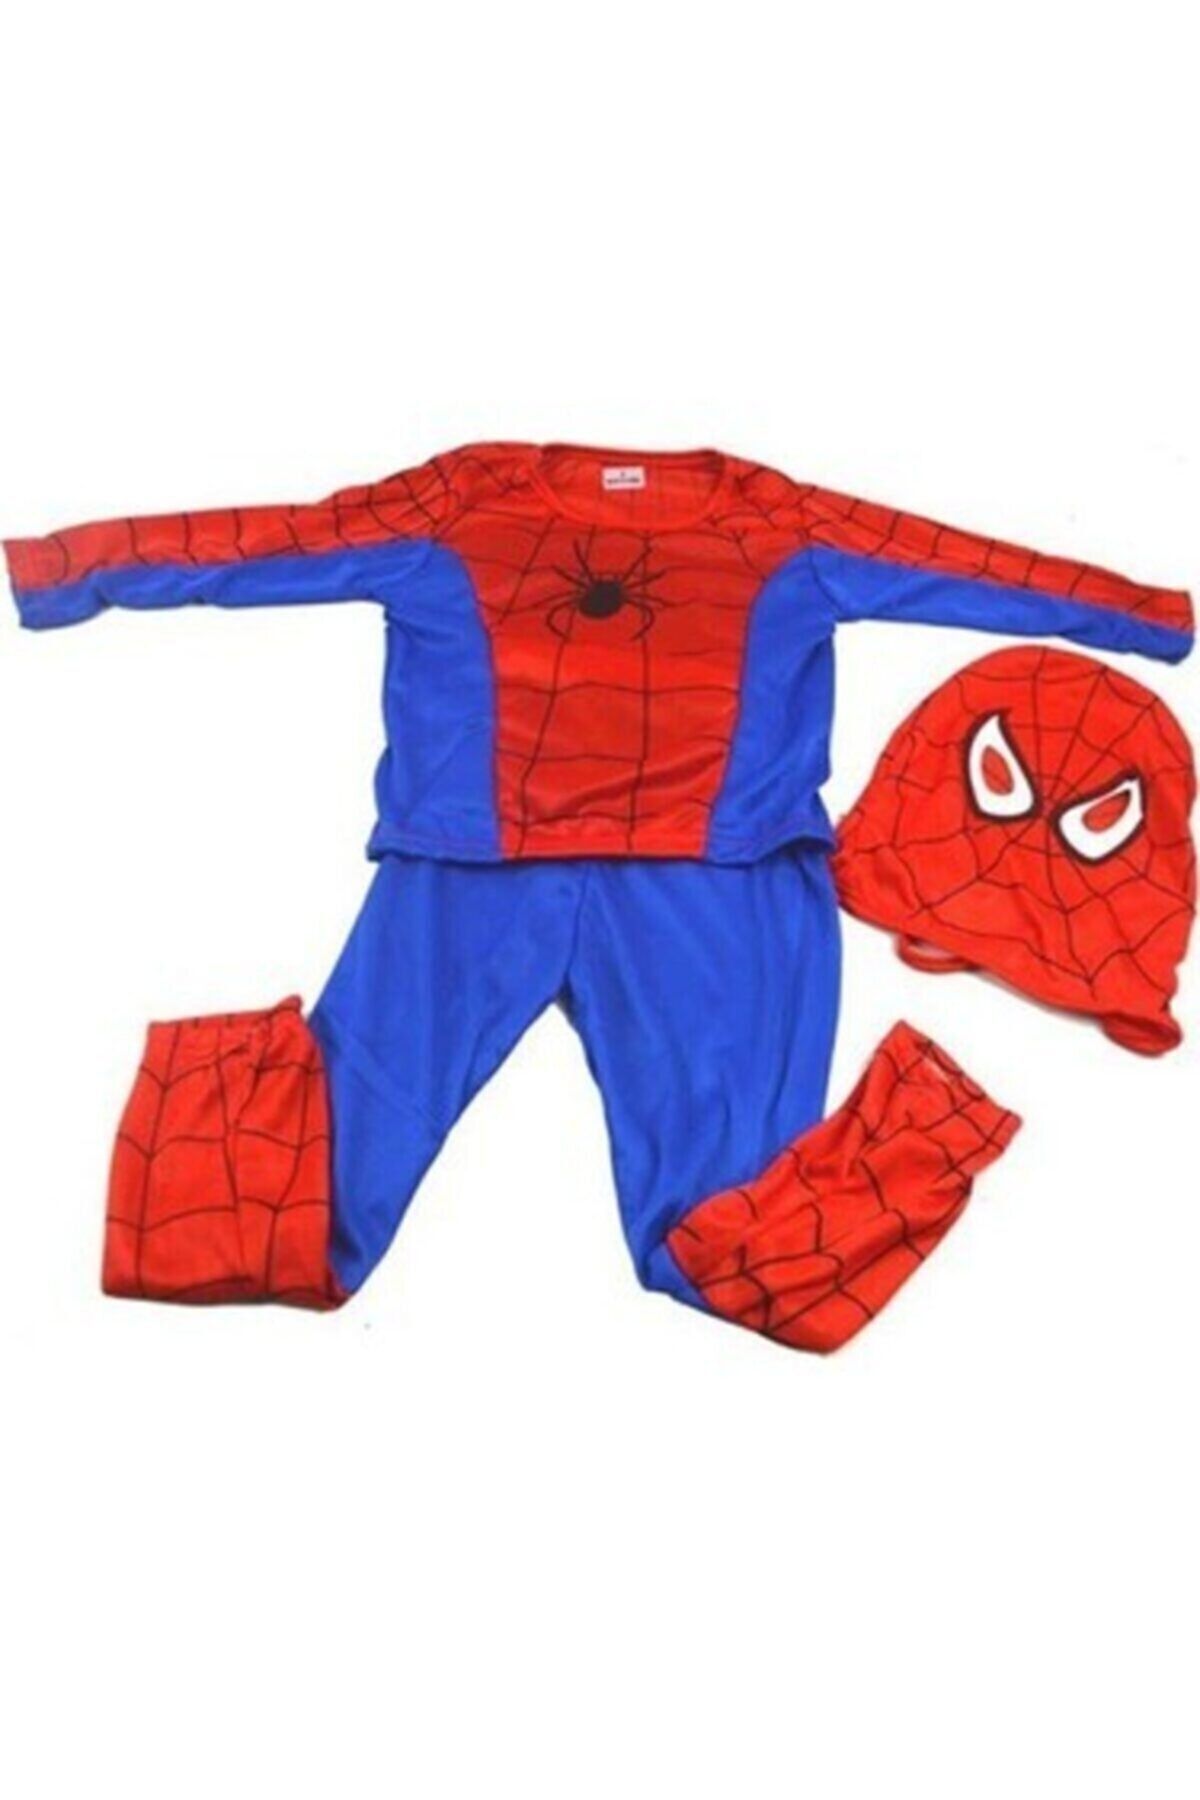 DİSNEY Spıderman Kostüm 5 - 6 Yaş Spiderman Kostümü - Örümcek Adam Spider Man Parti Kostüm